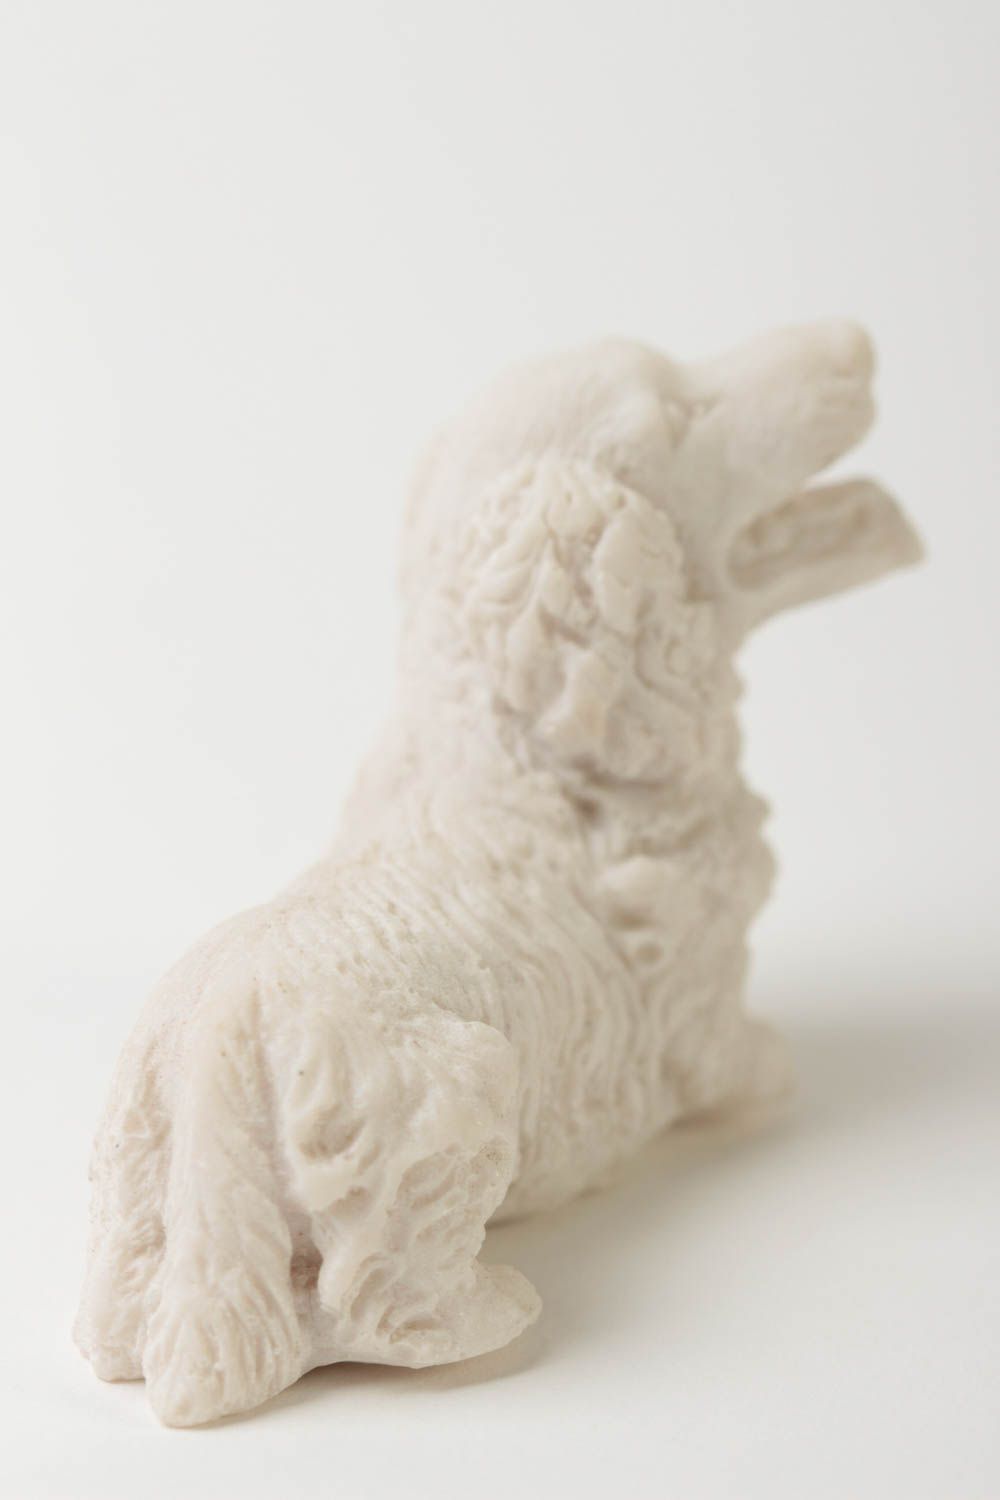 Handmade figurine polymer resin crafts diy statuette creative work ideas photo 4